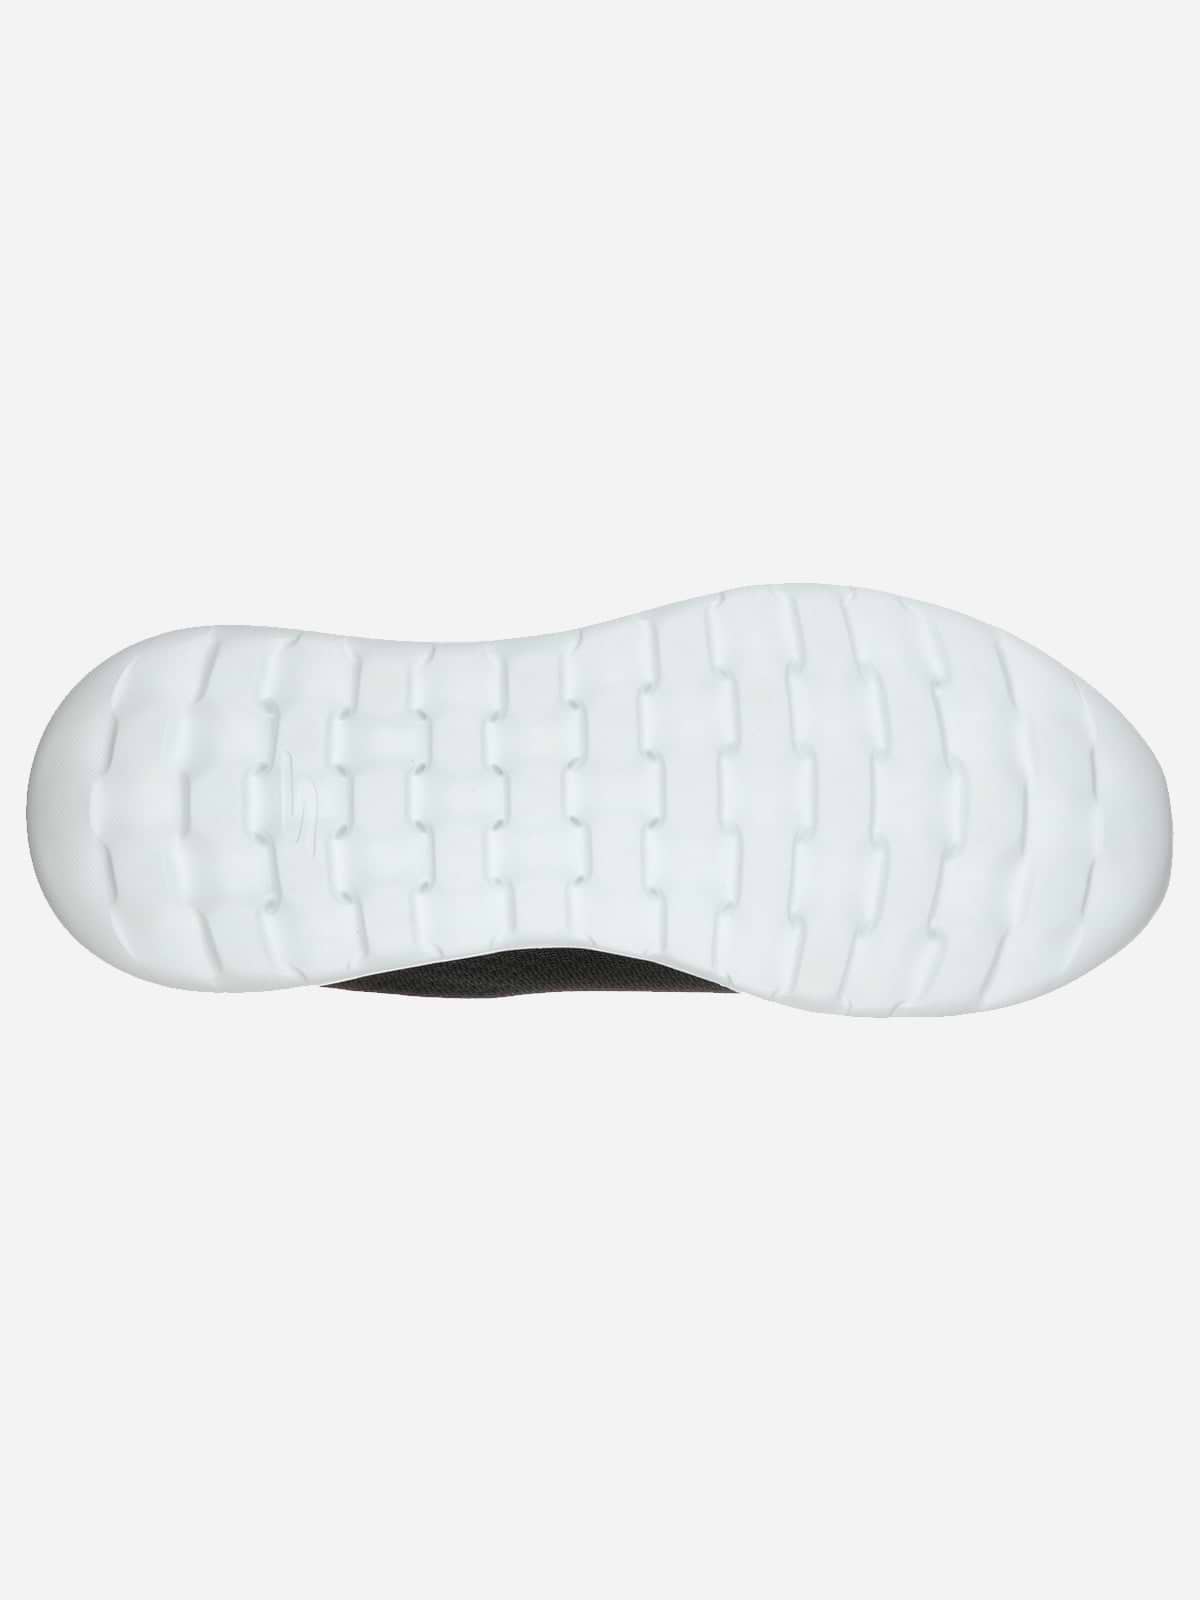 נעלי ספורט Ortholite Air Cooled Goga / גברים- Skechers|סקצ'רס 